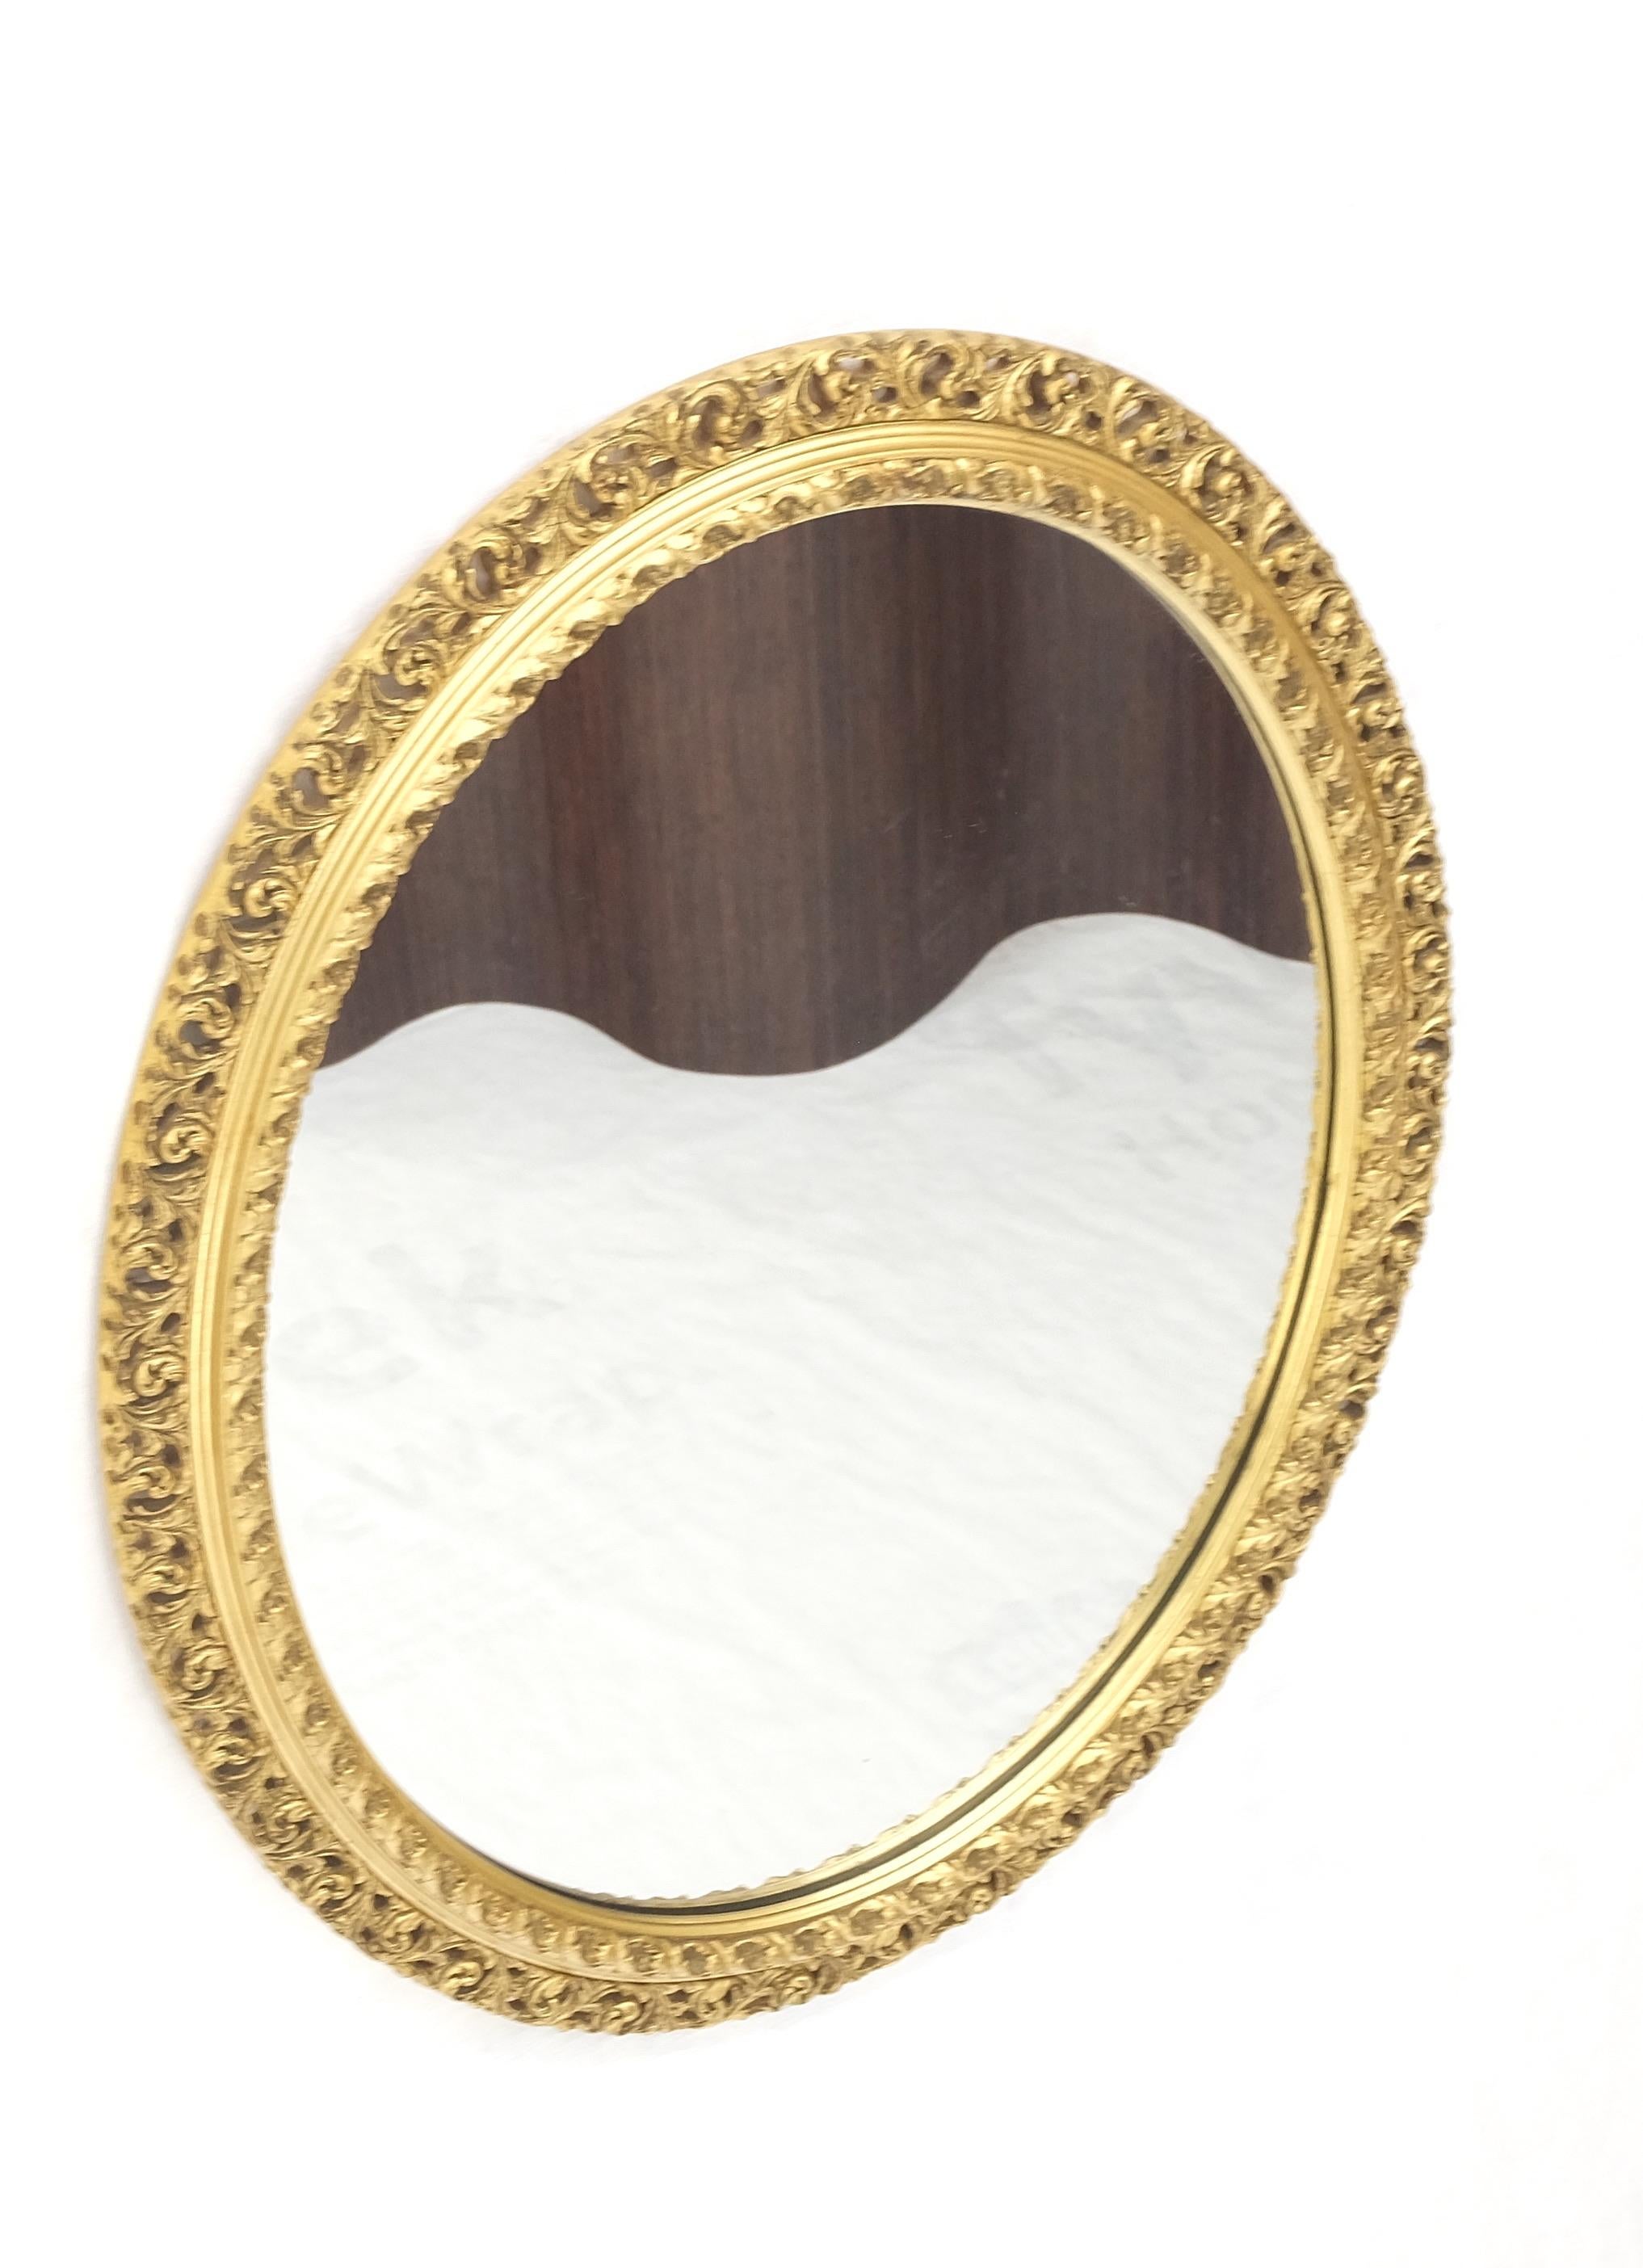 Oval Gesso & Holz geschnitzt Gold vergoldeten Rahmen Wandspiegel MINT! (Geschnitzt) im Angebot